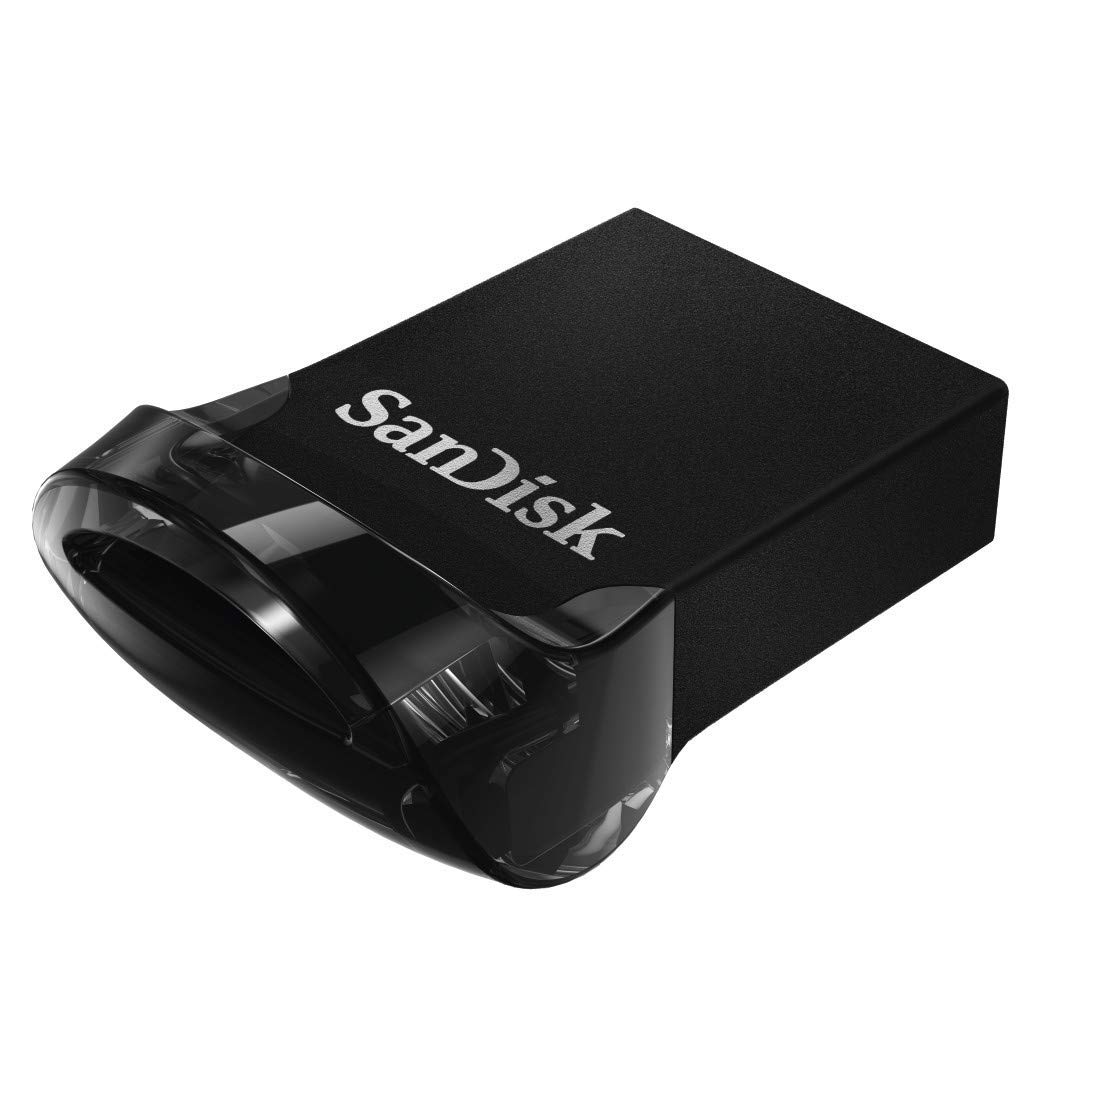 USB 3.1 SanDisk de 128GB solo 16,9€